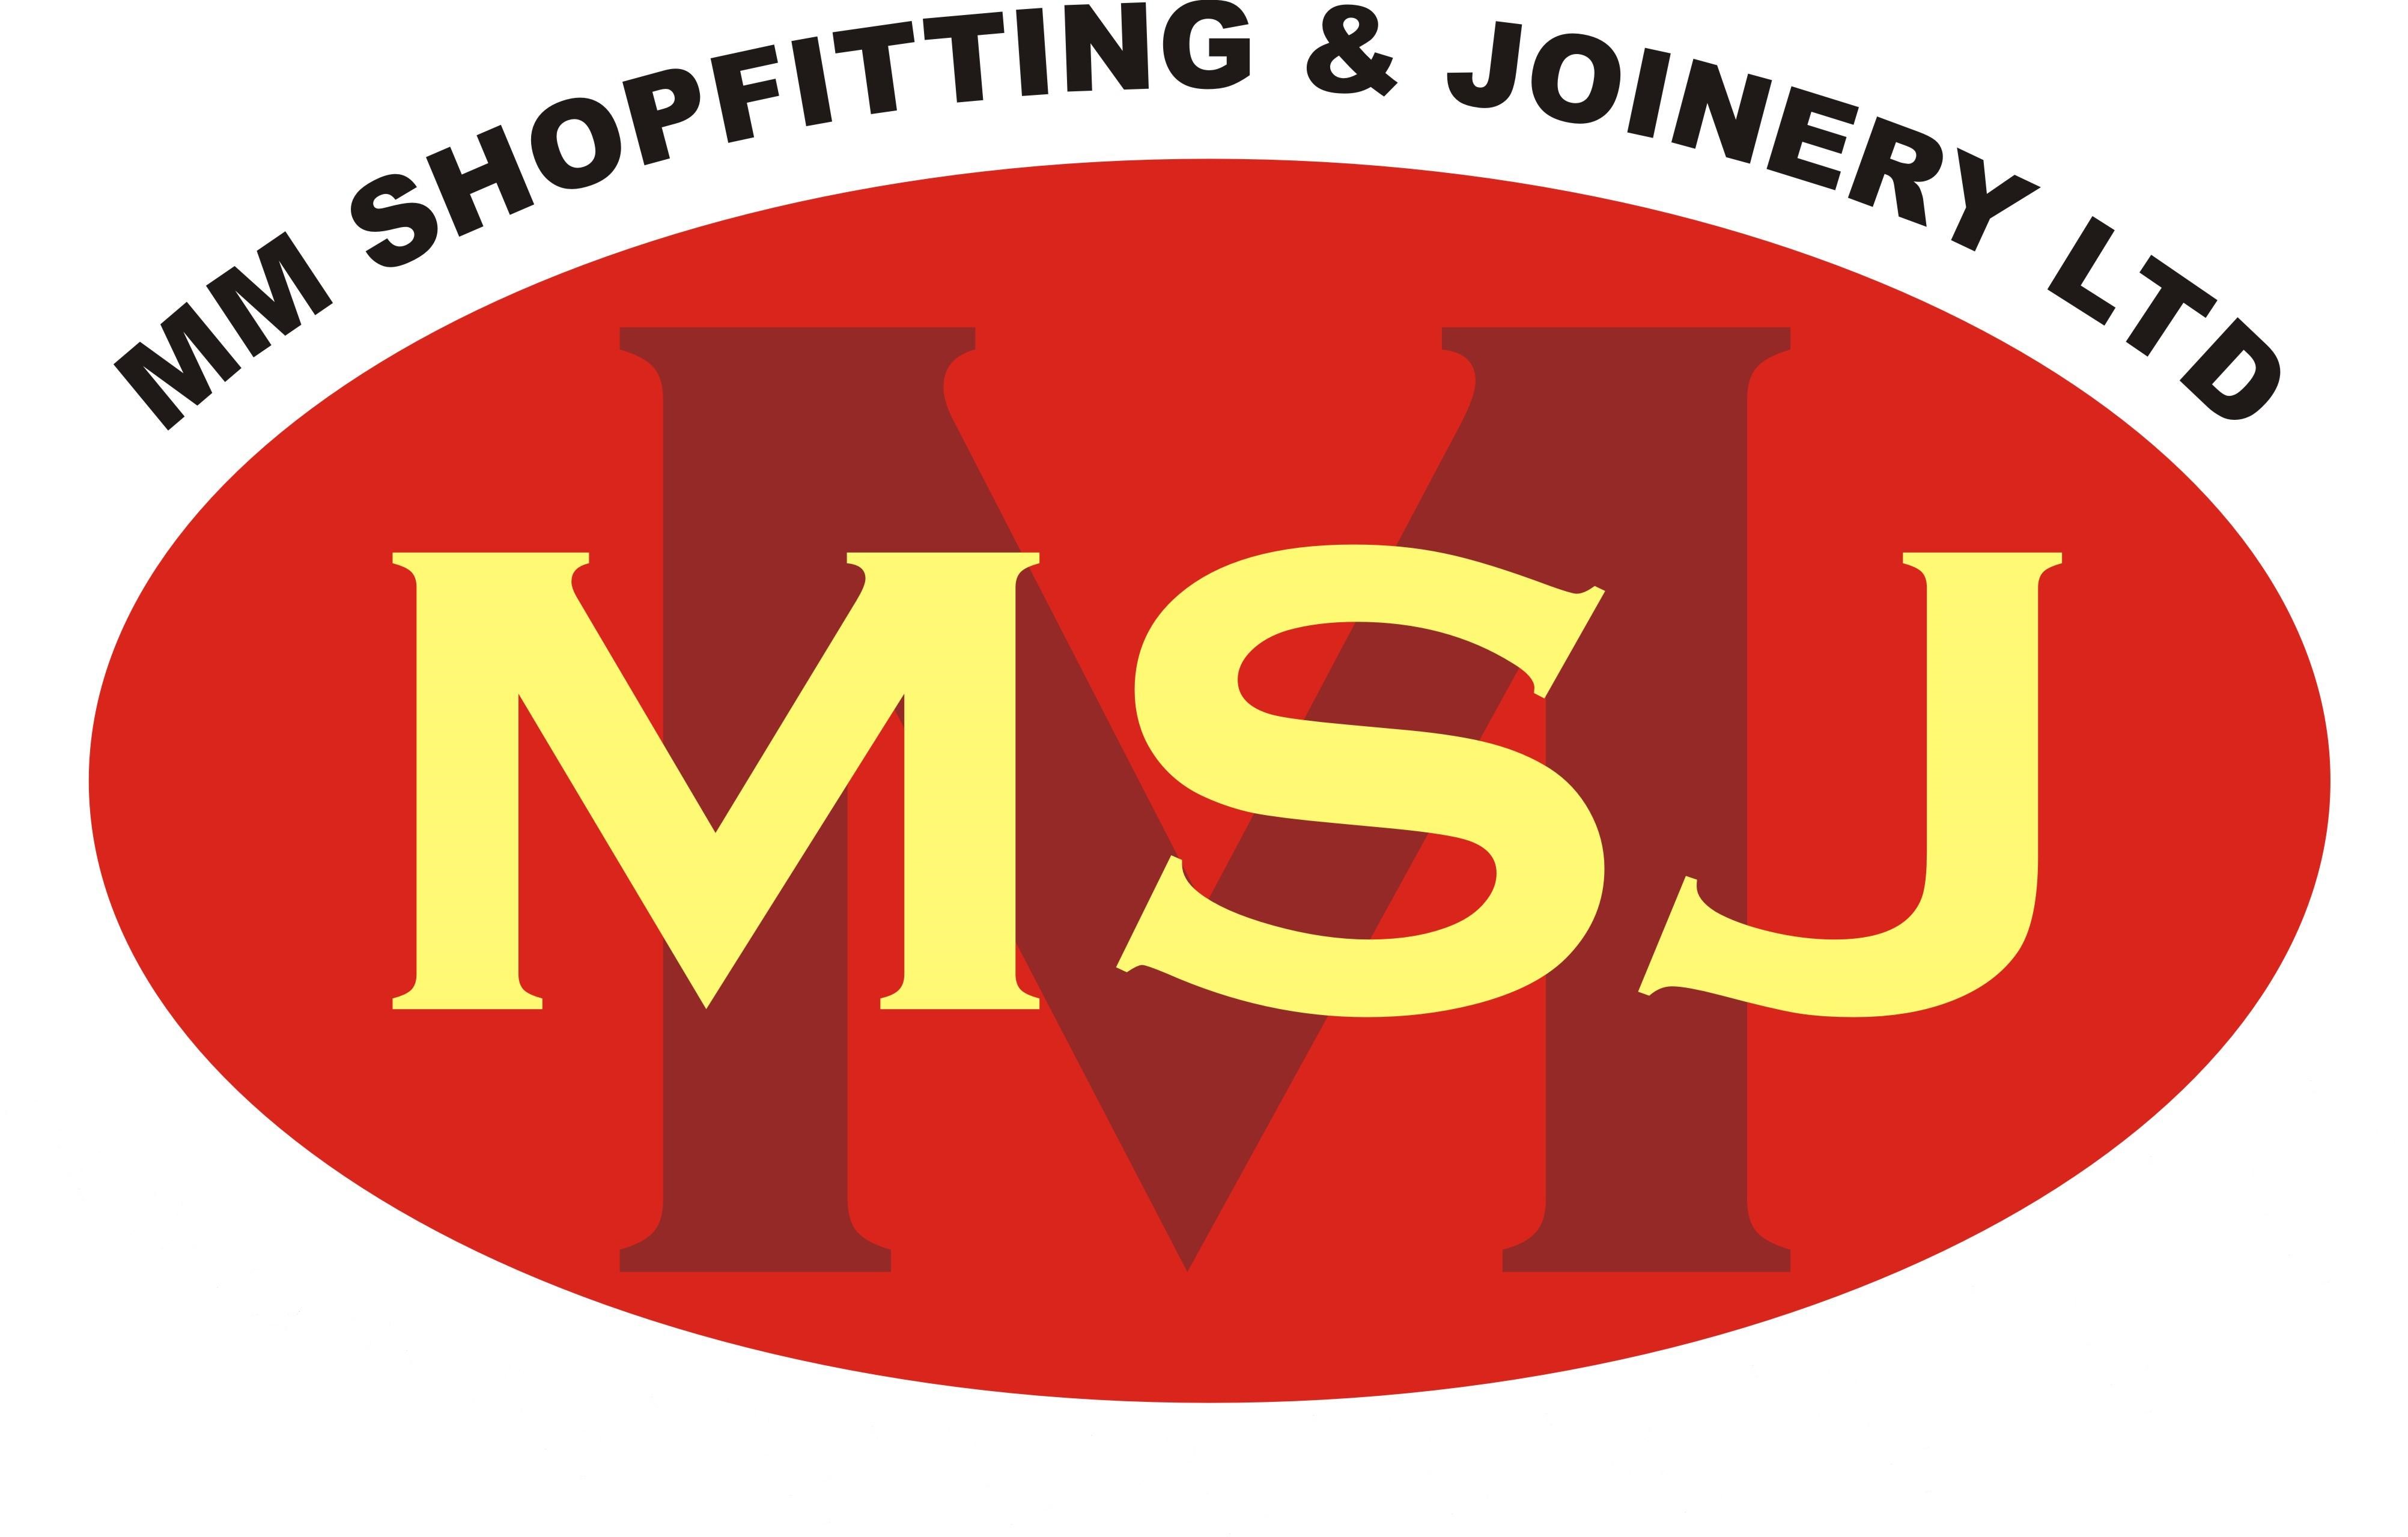 MM Shopfitting & Joinery Ltd